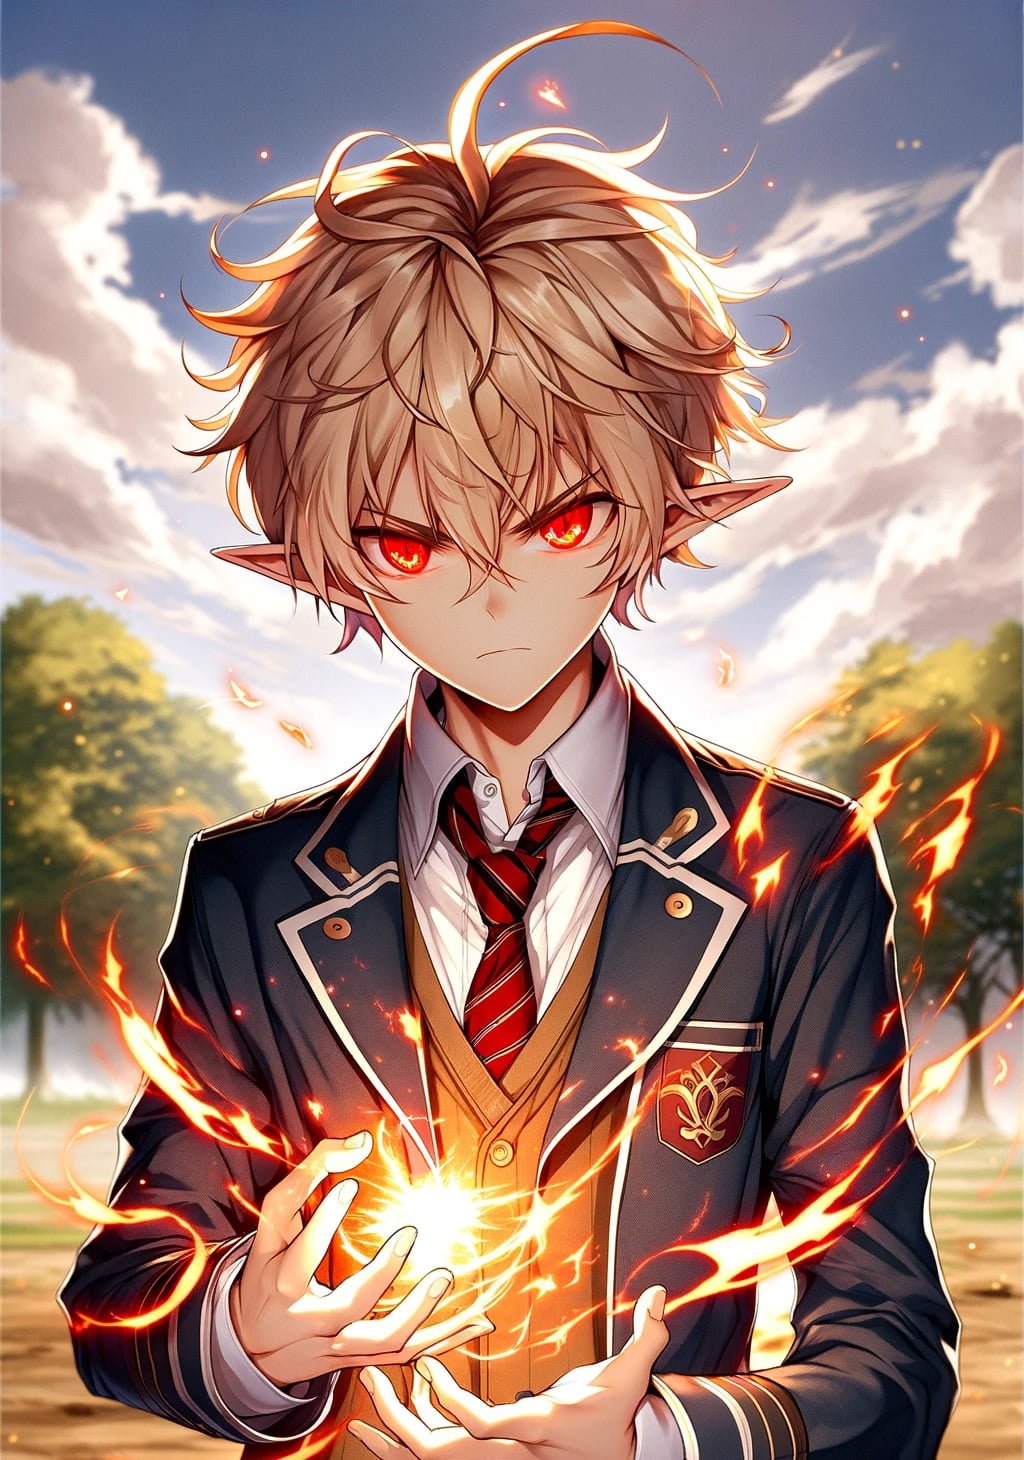 Young boy holding fire magic dressed in school uniform in open field